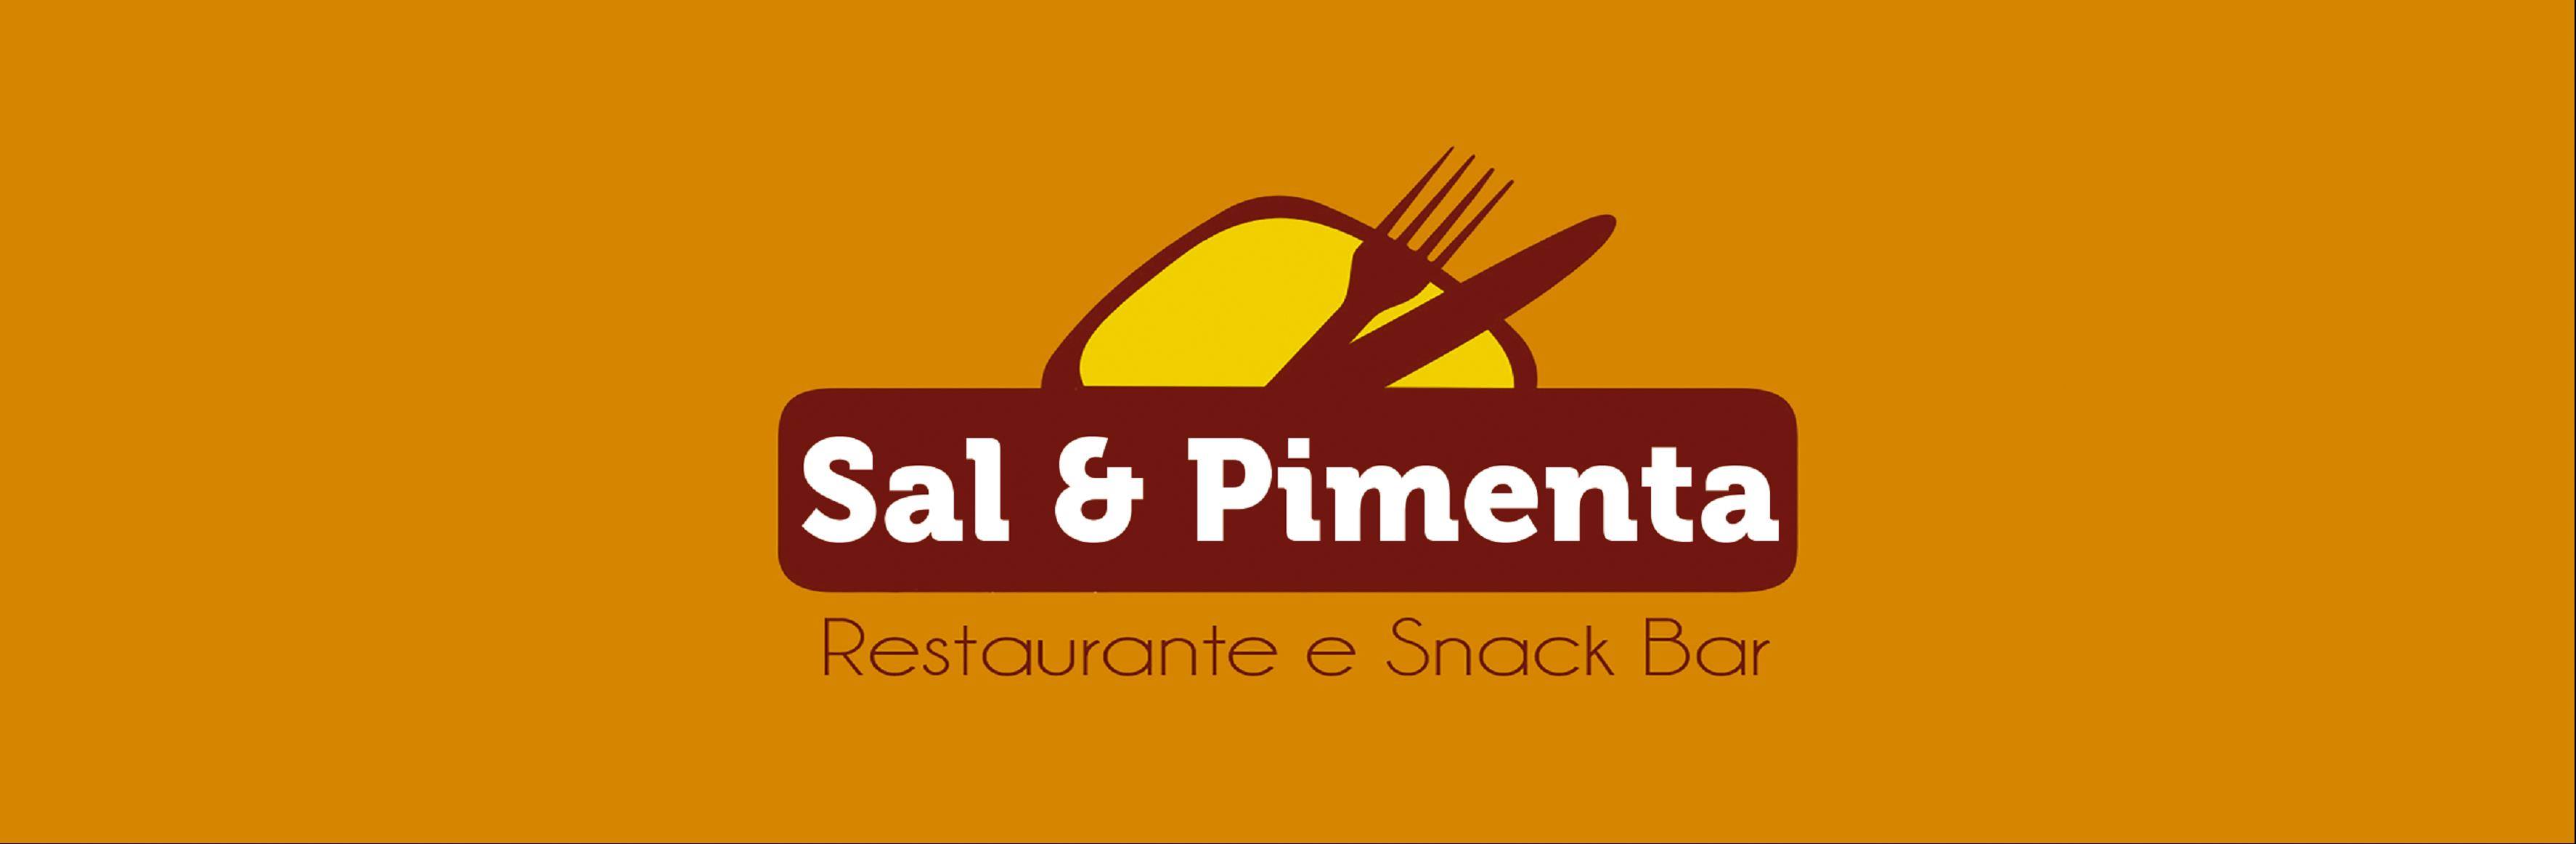 Restaurante Sal & Pimenta